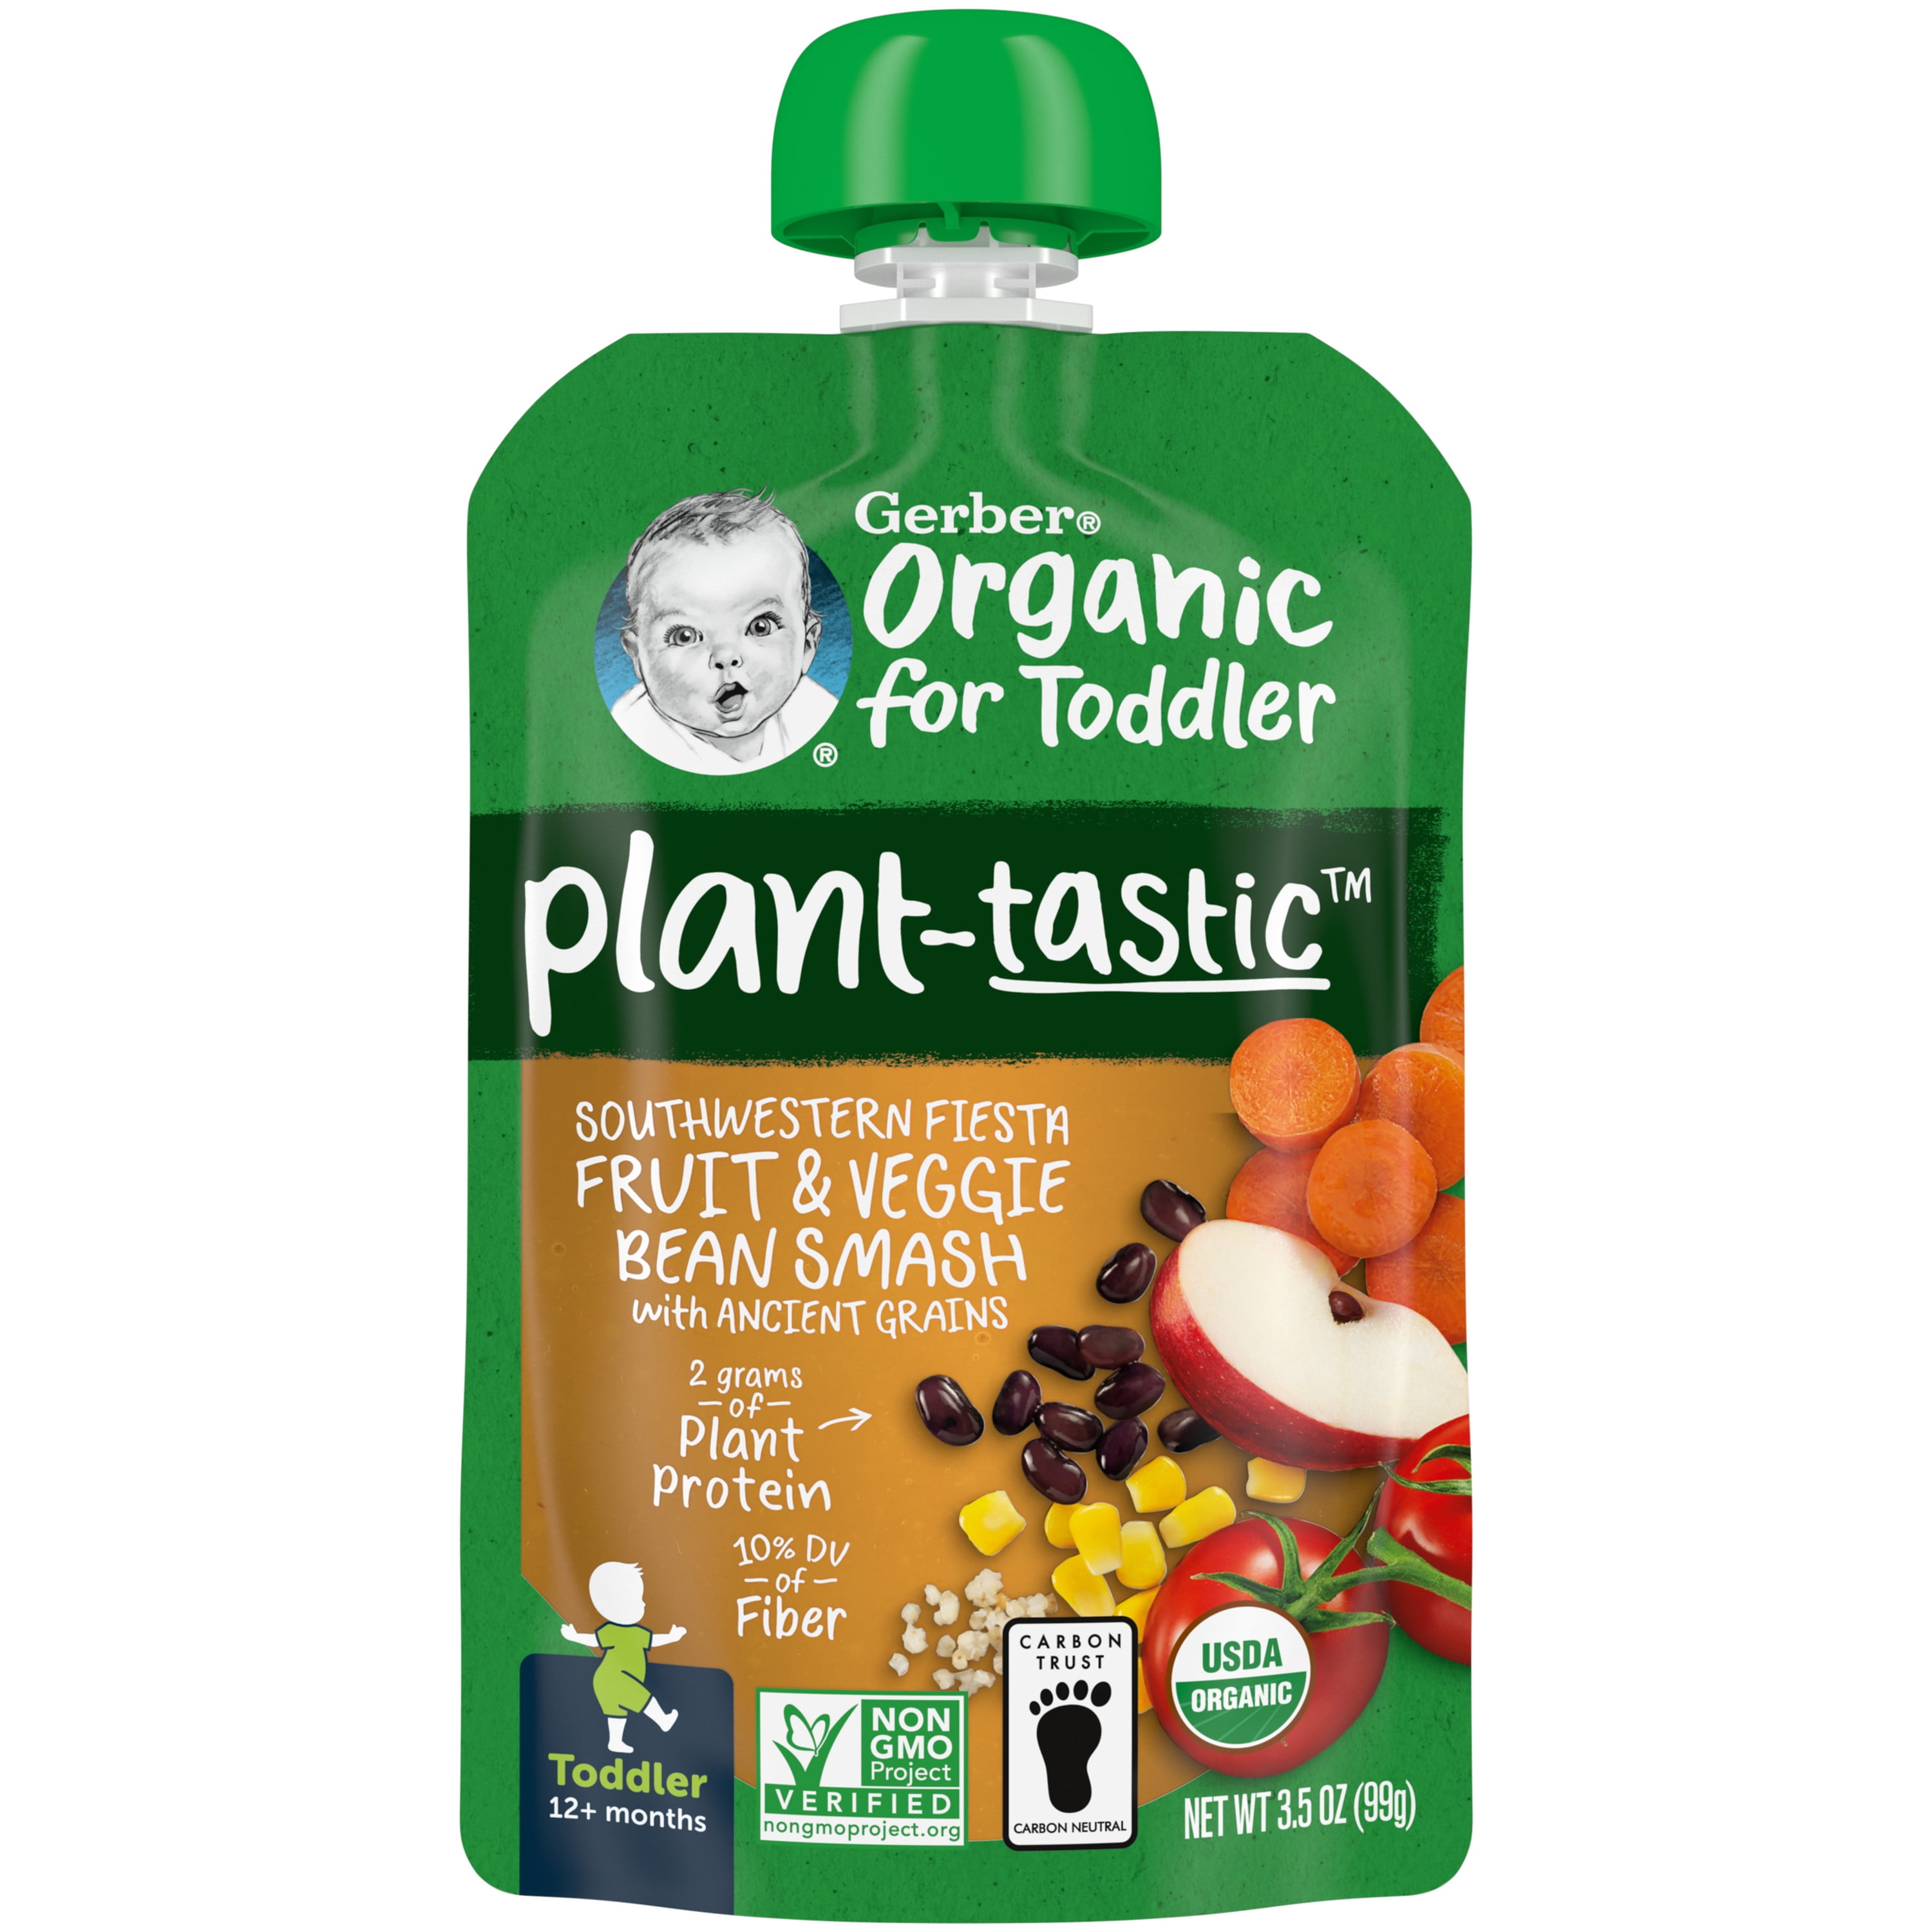 Gerber Organic Plant-tastic Toddler Food, Southwest Fiesta Fruit & Veggie Bean Smash, 3.5 oz Pouch